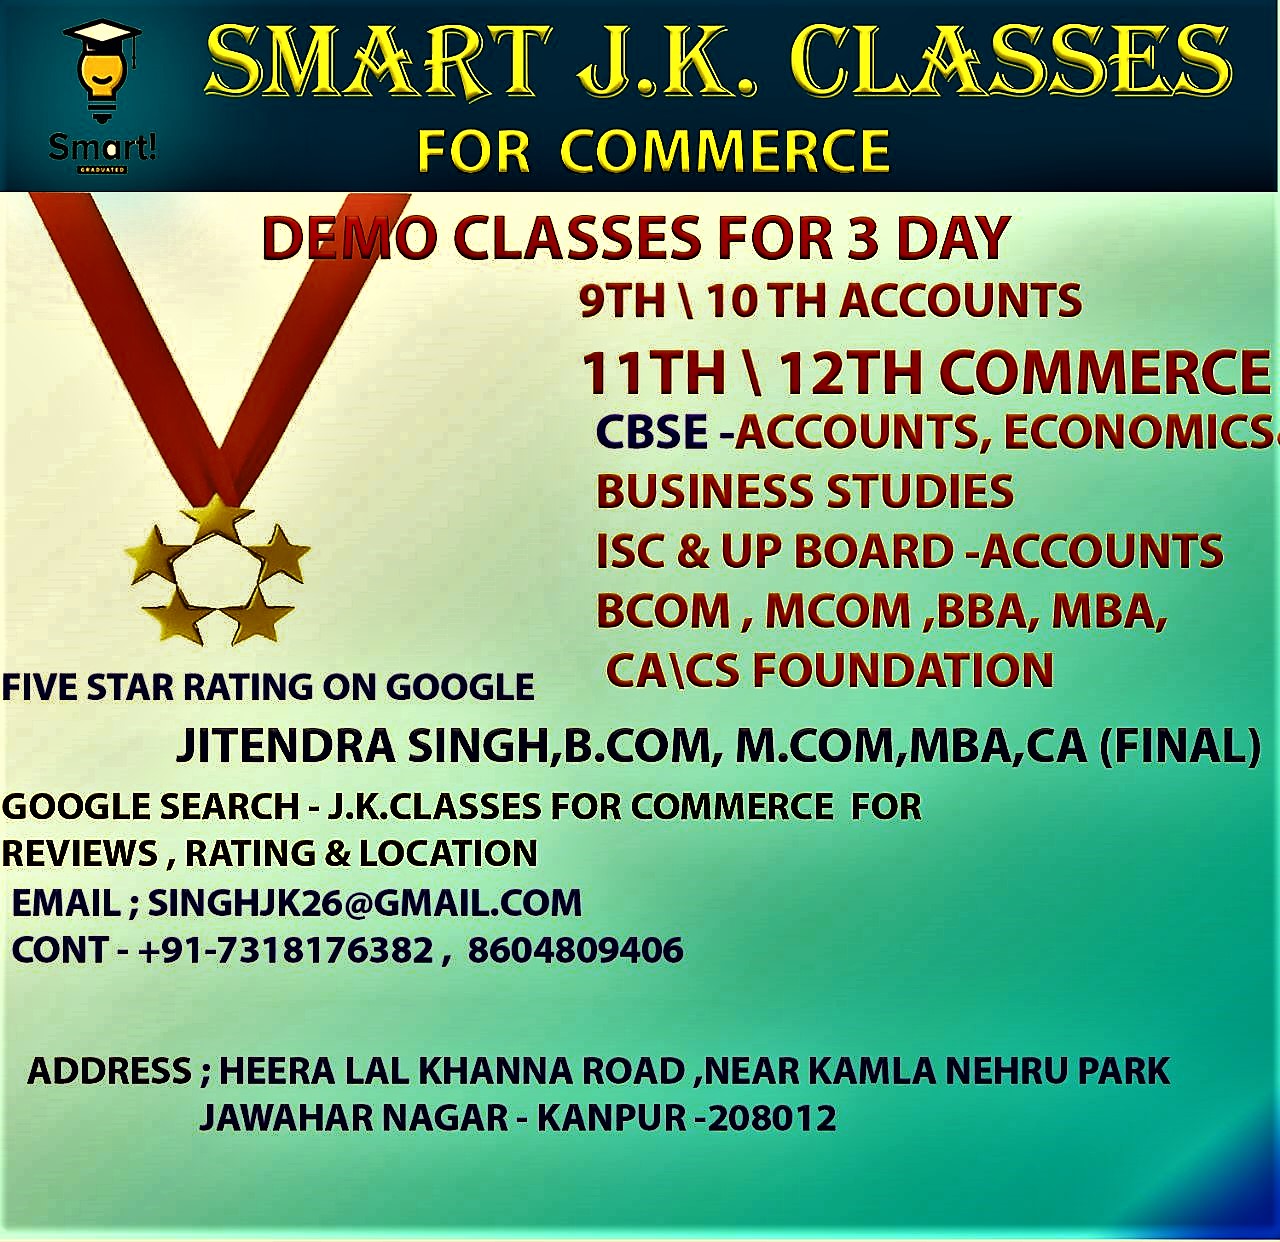 24097SMART JK.CLASSES COMMERCE
11th & 12th
Accounts Economics Business Studies